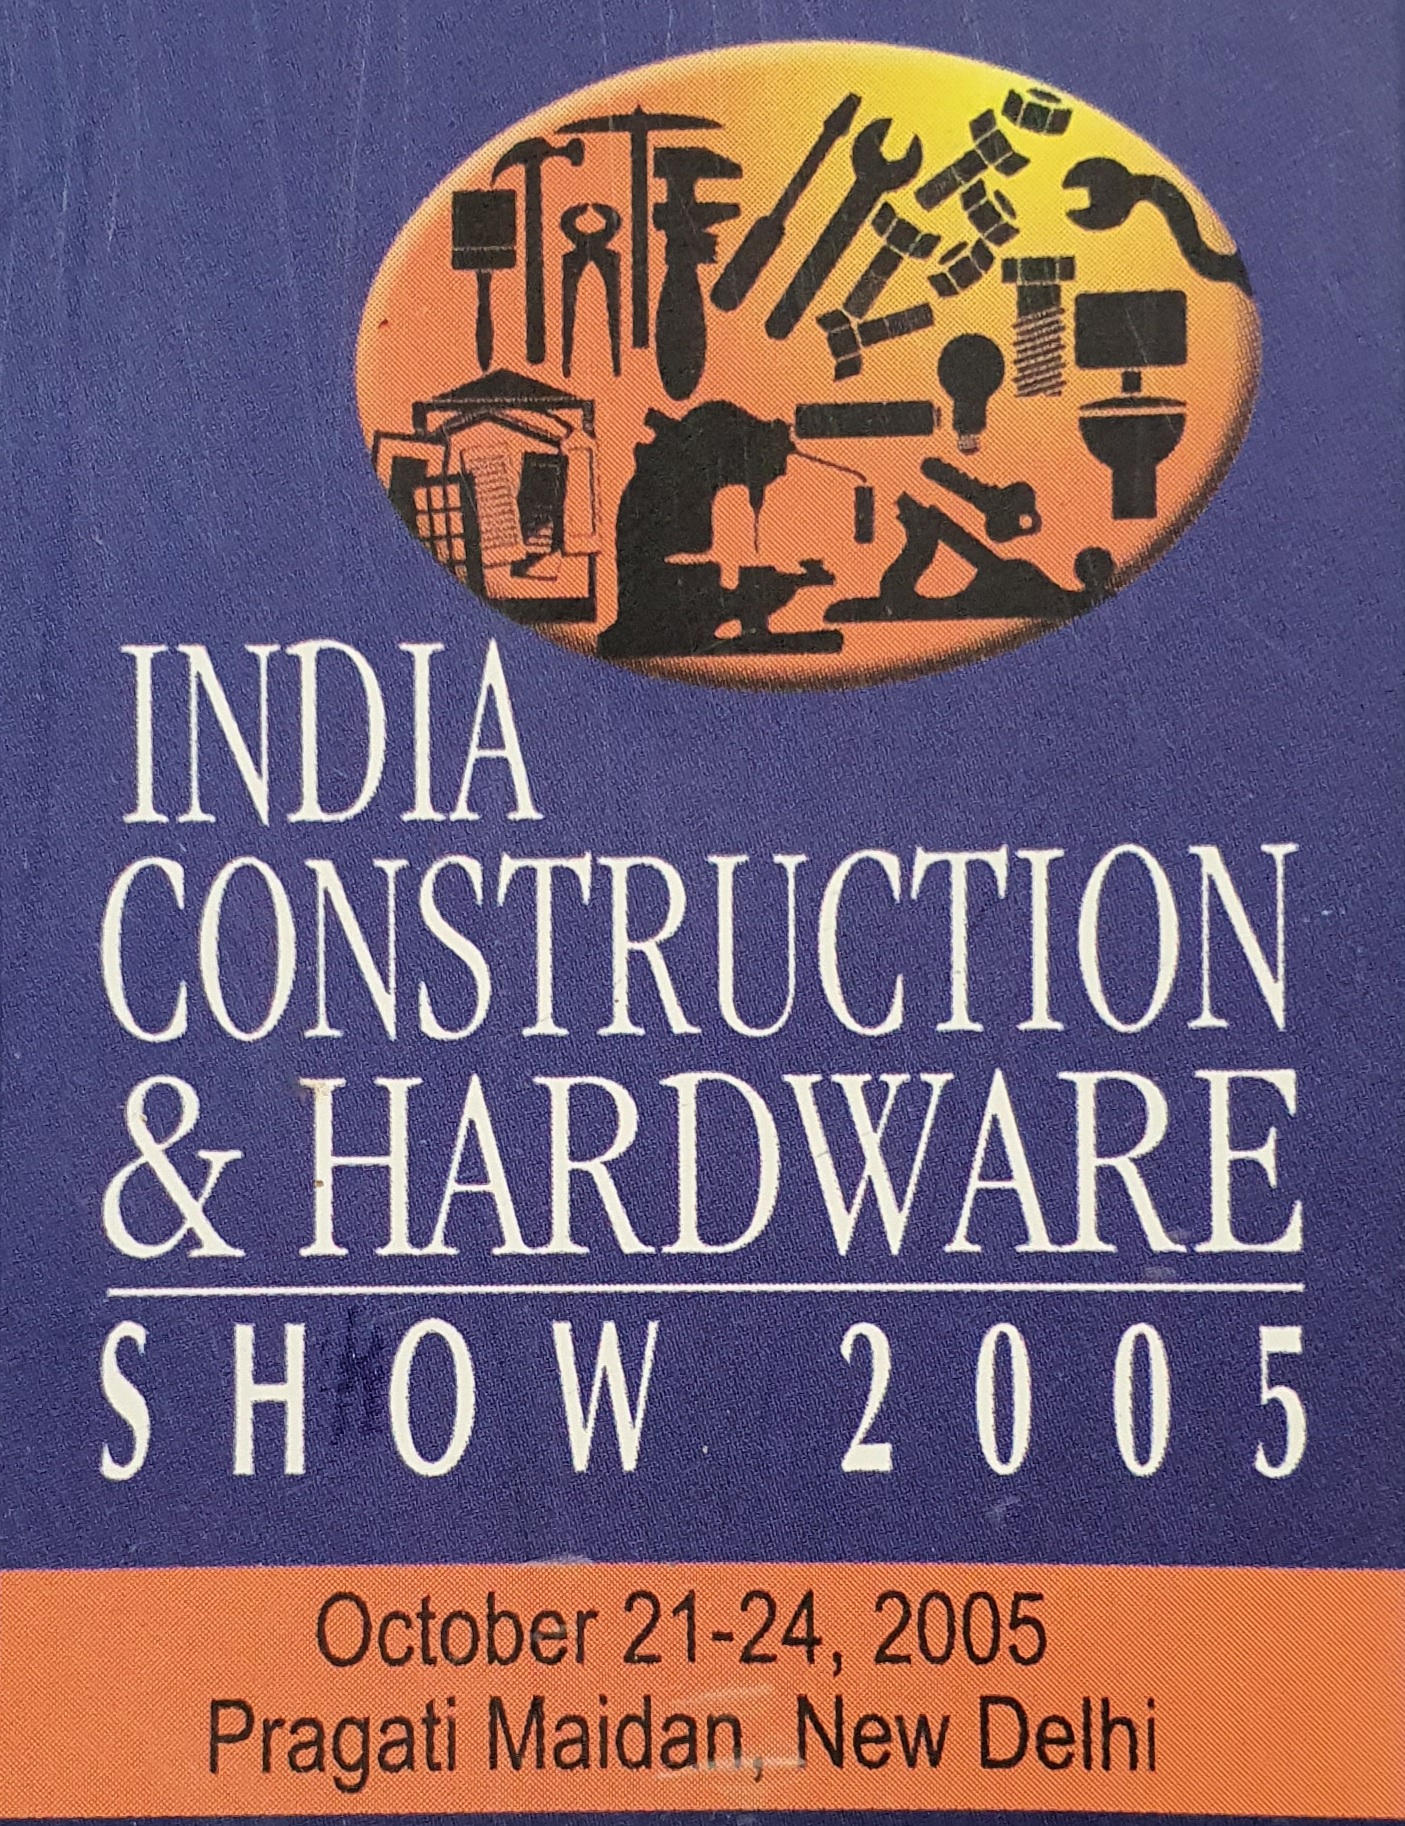 India Construction & Hardware Show-2005